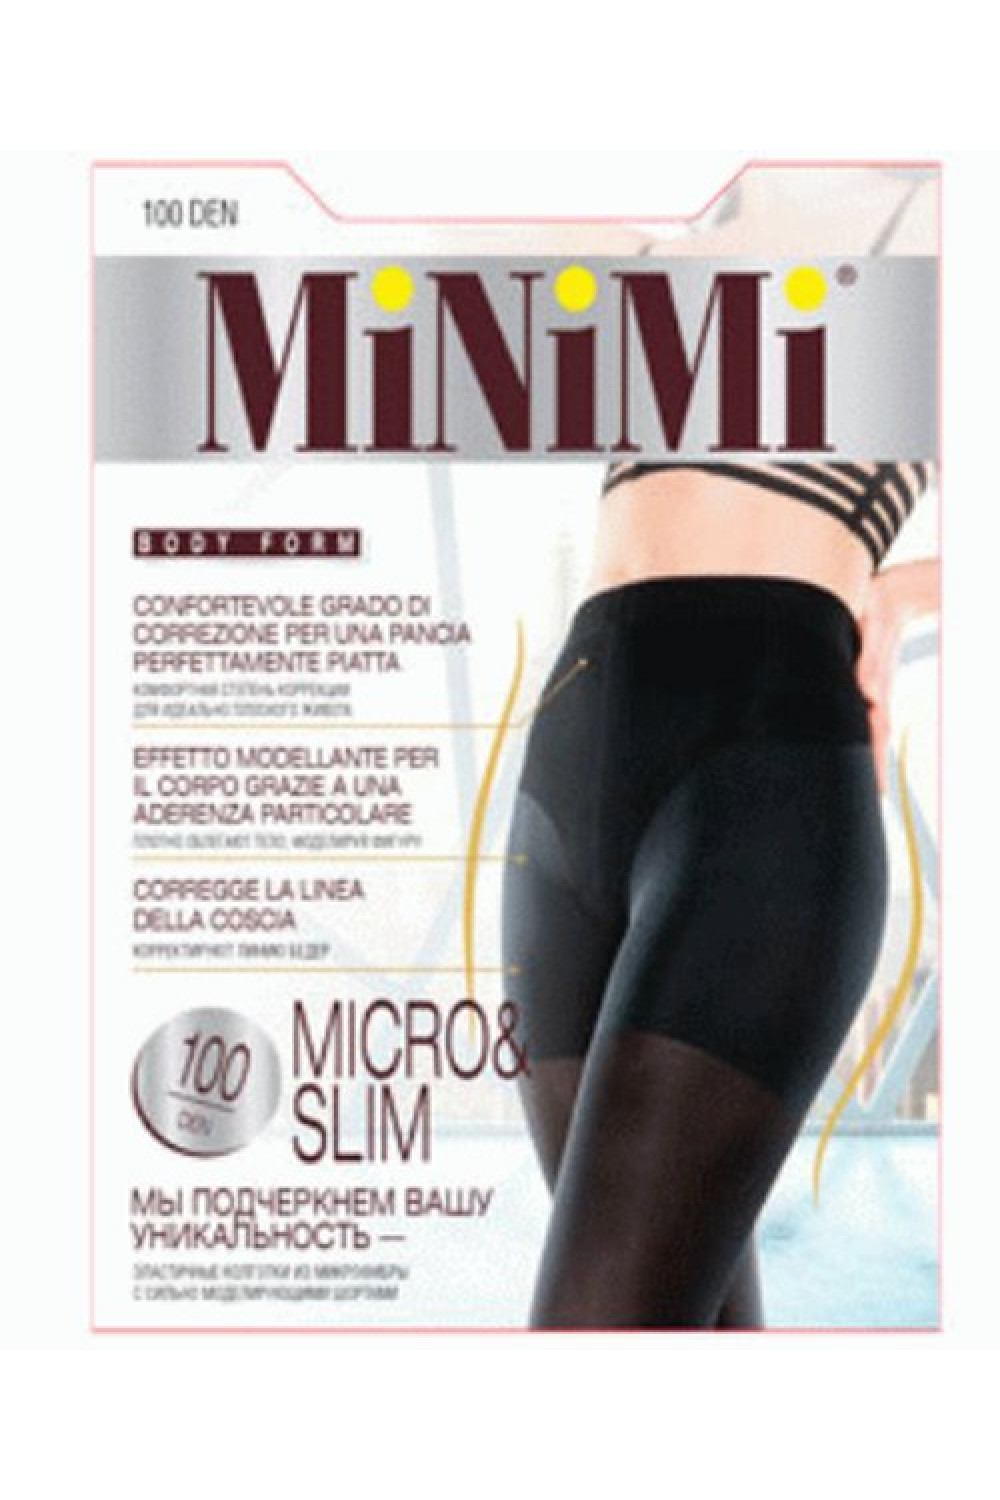 Плотные эластичные колготки MICRO&SLIM 100 (60/1) утяжка микрофибра, Minimi